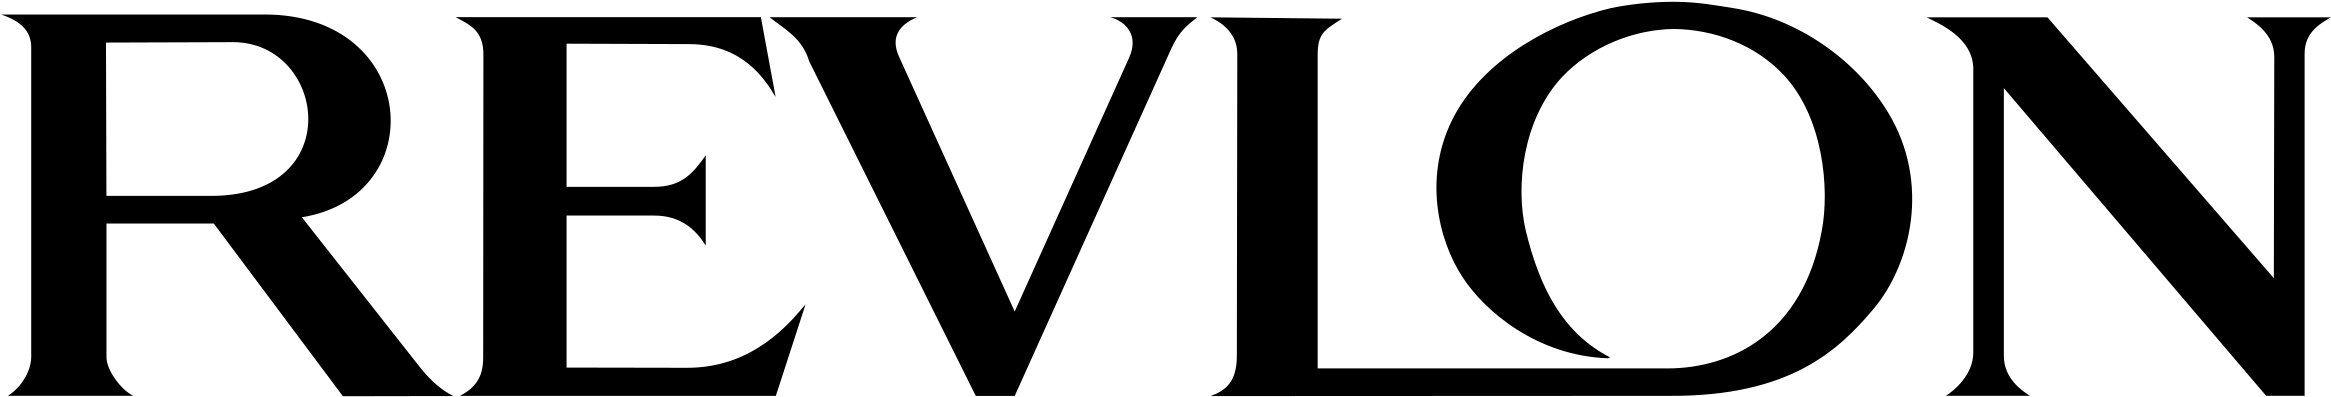 Revlon Logo Black And White - Revlon Logo Png (2400x2400), Png Download